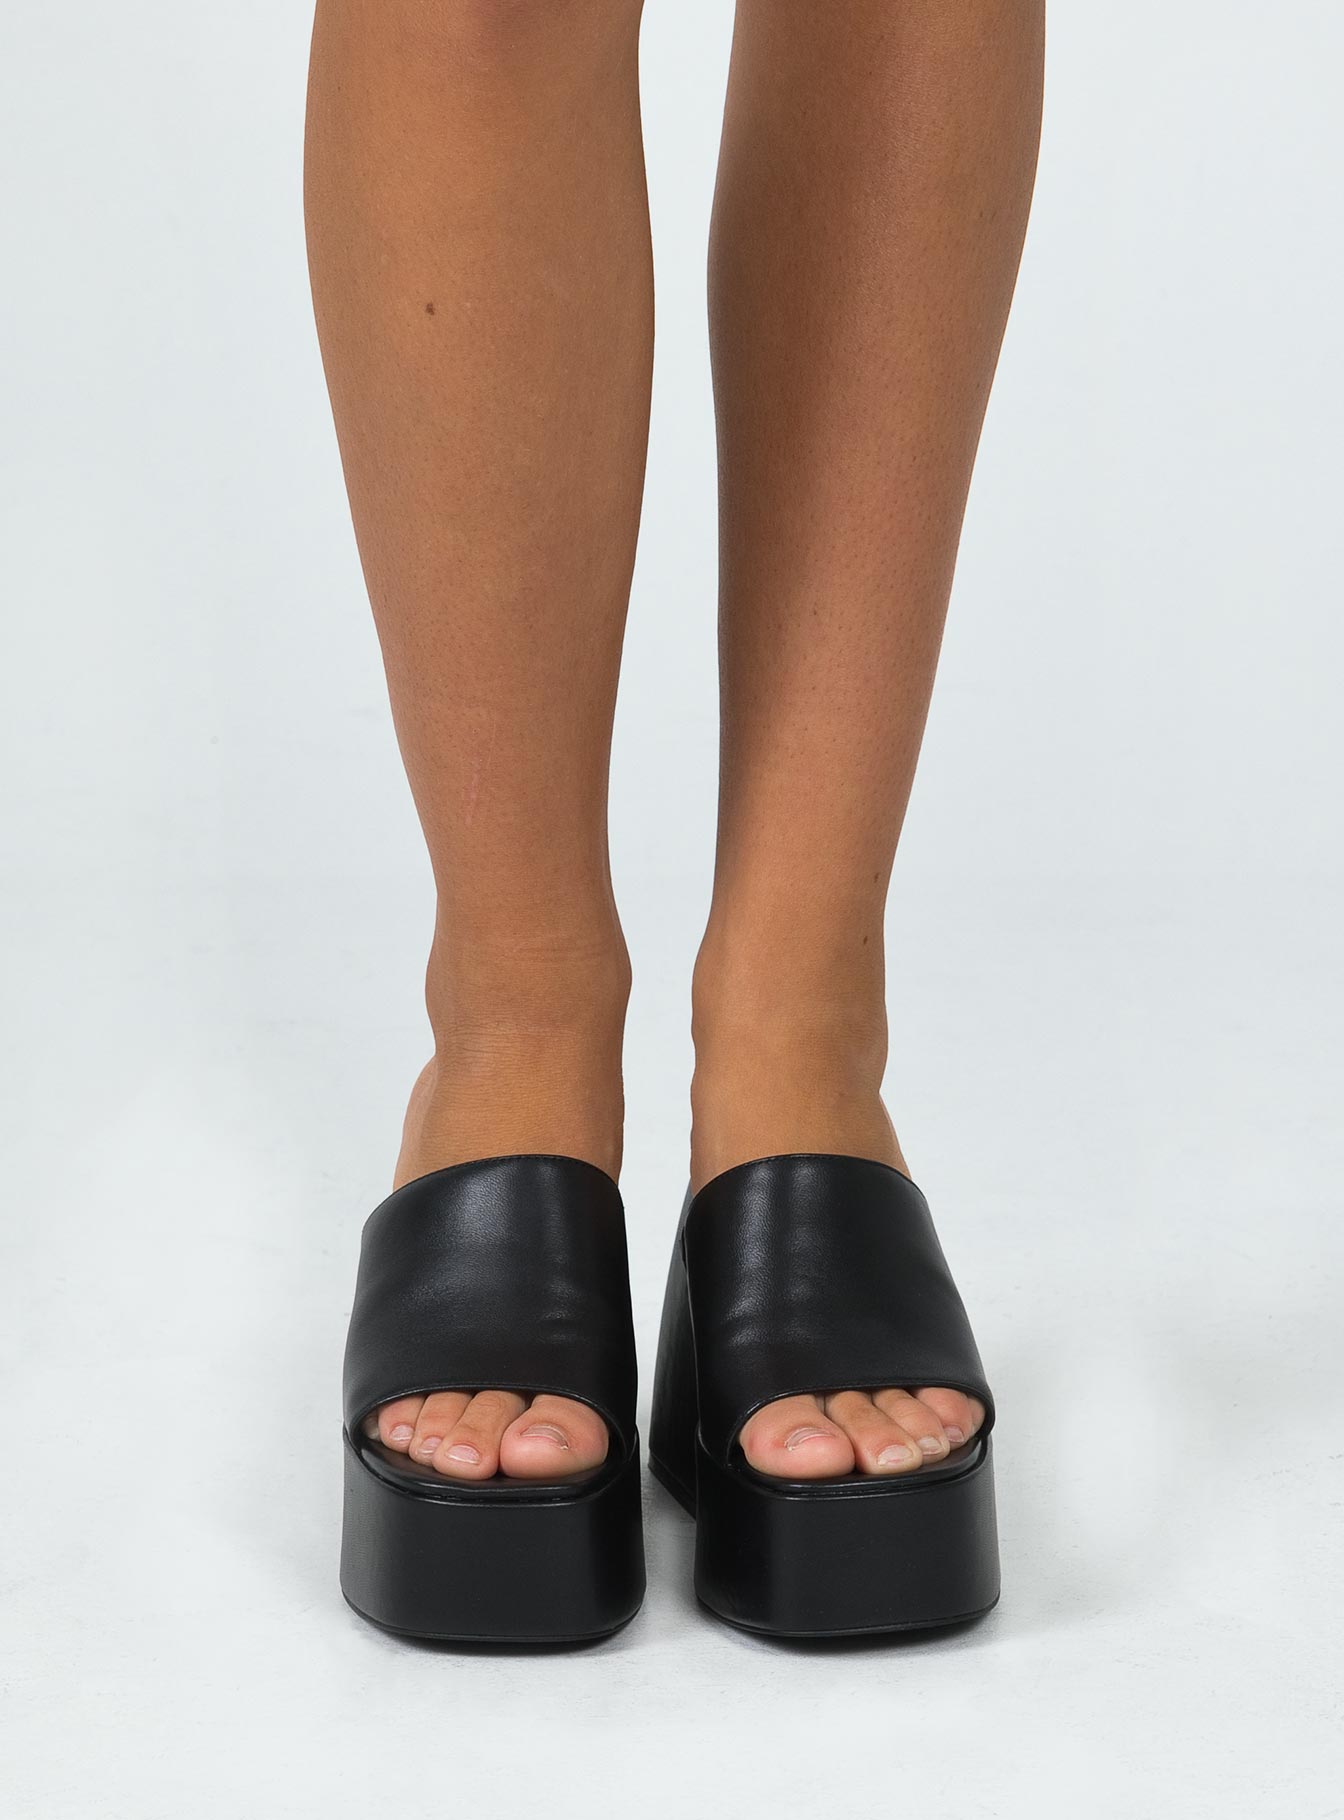 Platform Shoes Peep Toe Patent Leather Women Pumps | Black Platform Peep  Toe Pumps - Pumps - Aliexpress